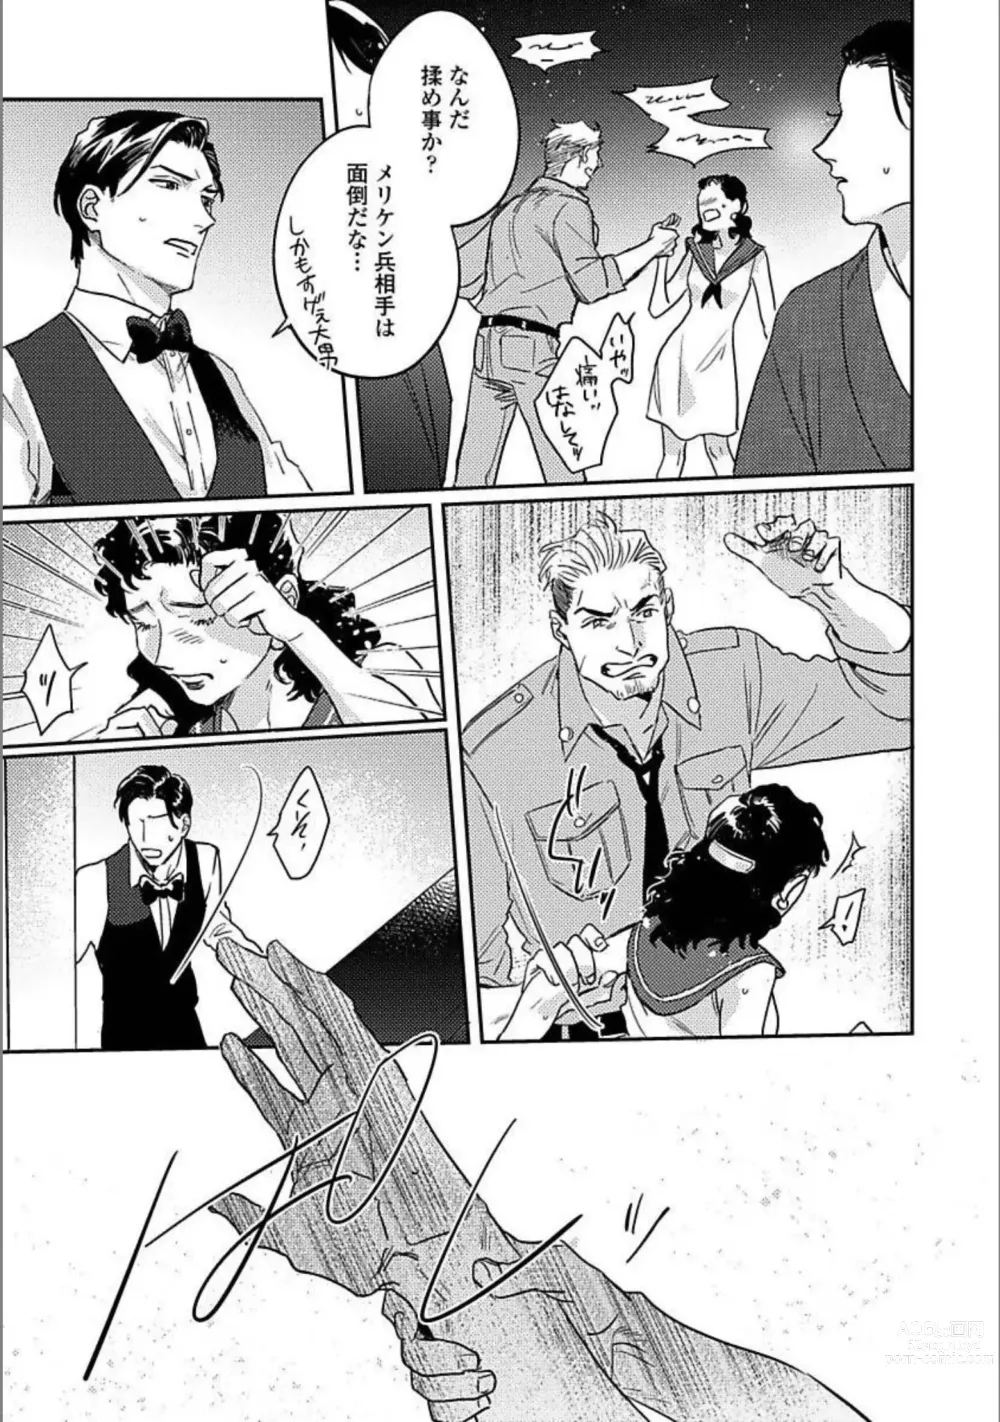 Page 14 of manga Hitori de Yoru wa Koerarenai - I Cant Stand Another Night Alone